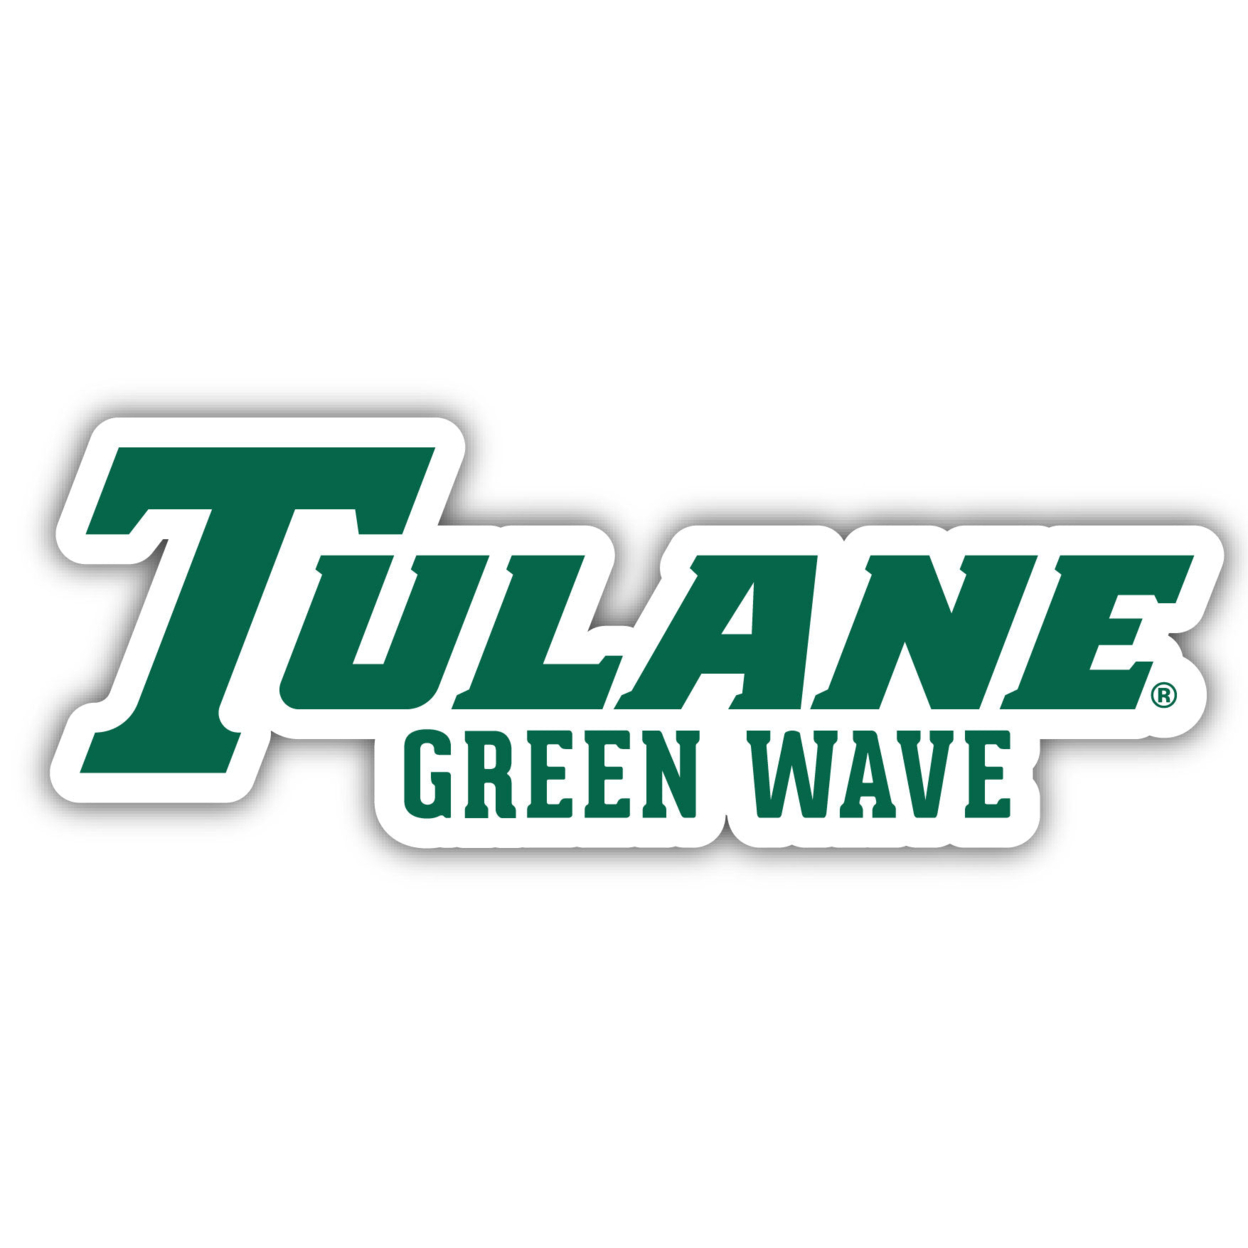 Tulane University Green Wave 2 Inch Vinyl Decal Sticker